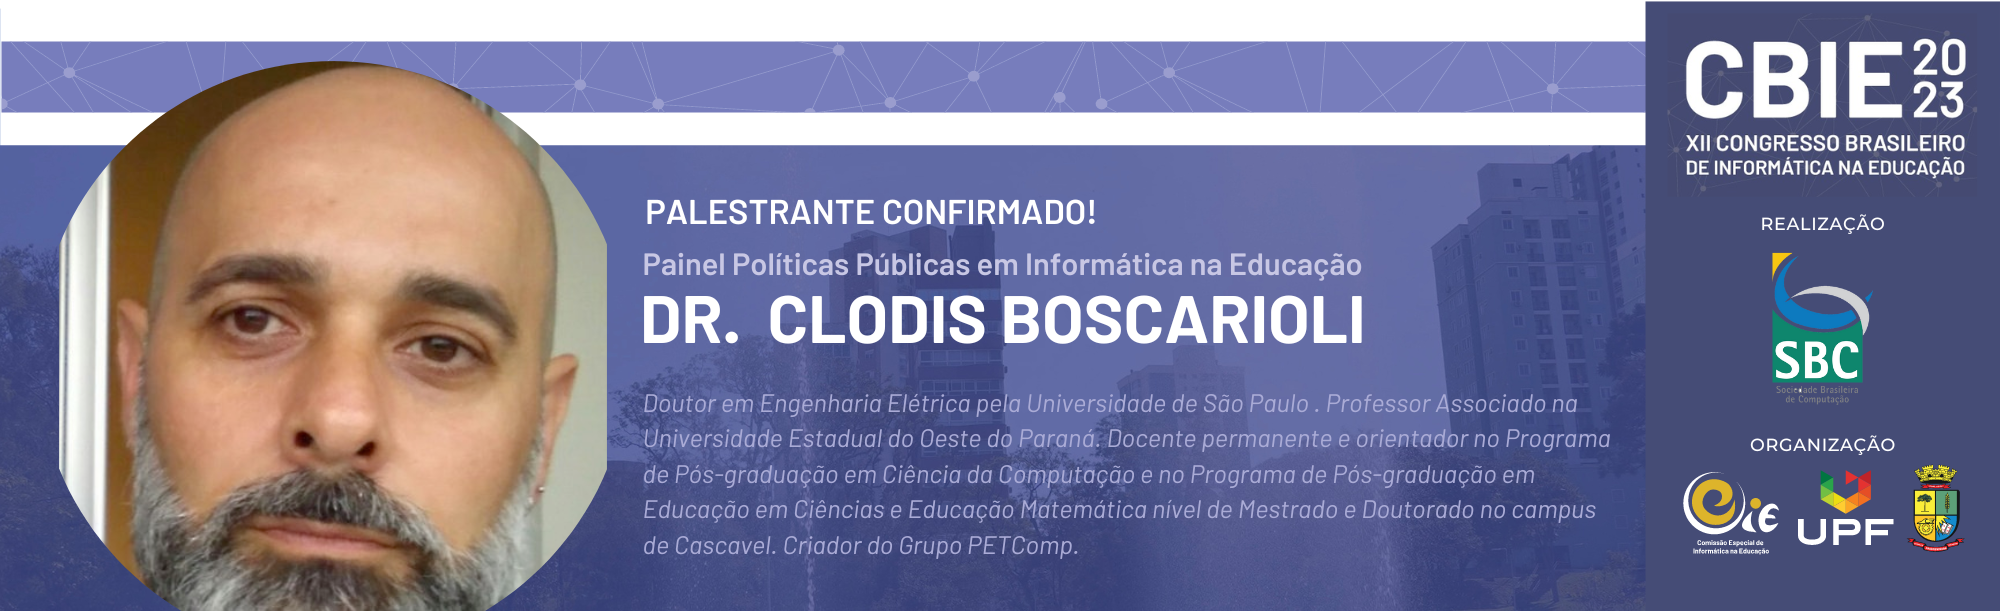 Clodis Boscaioli